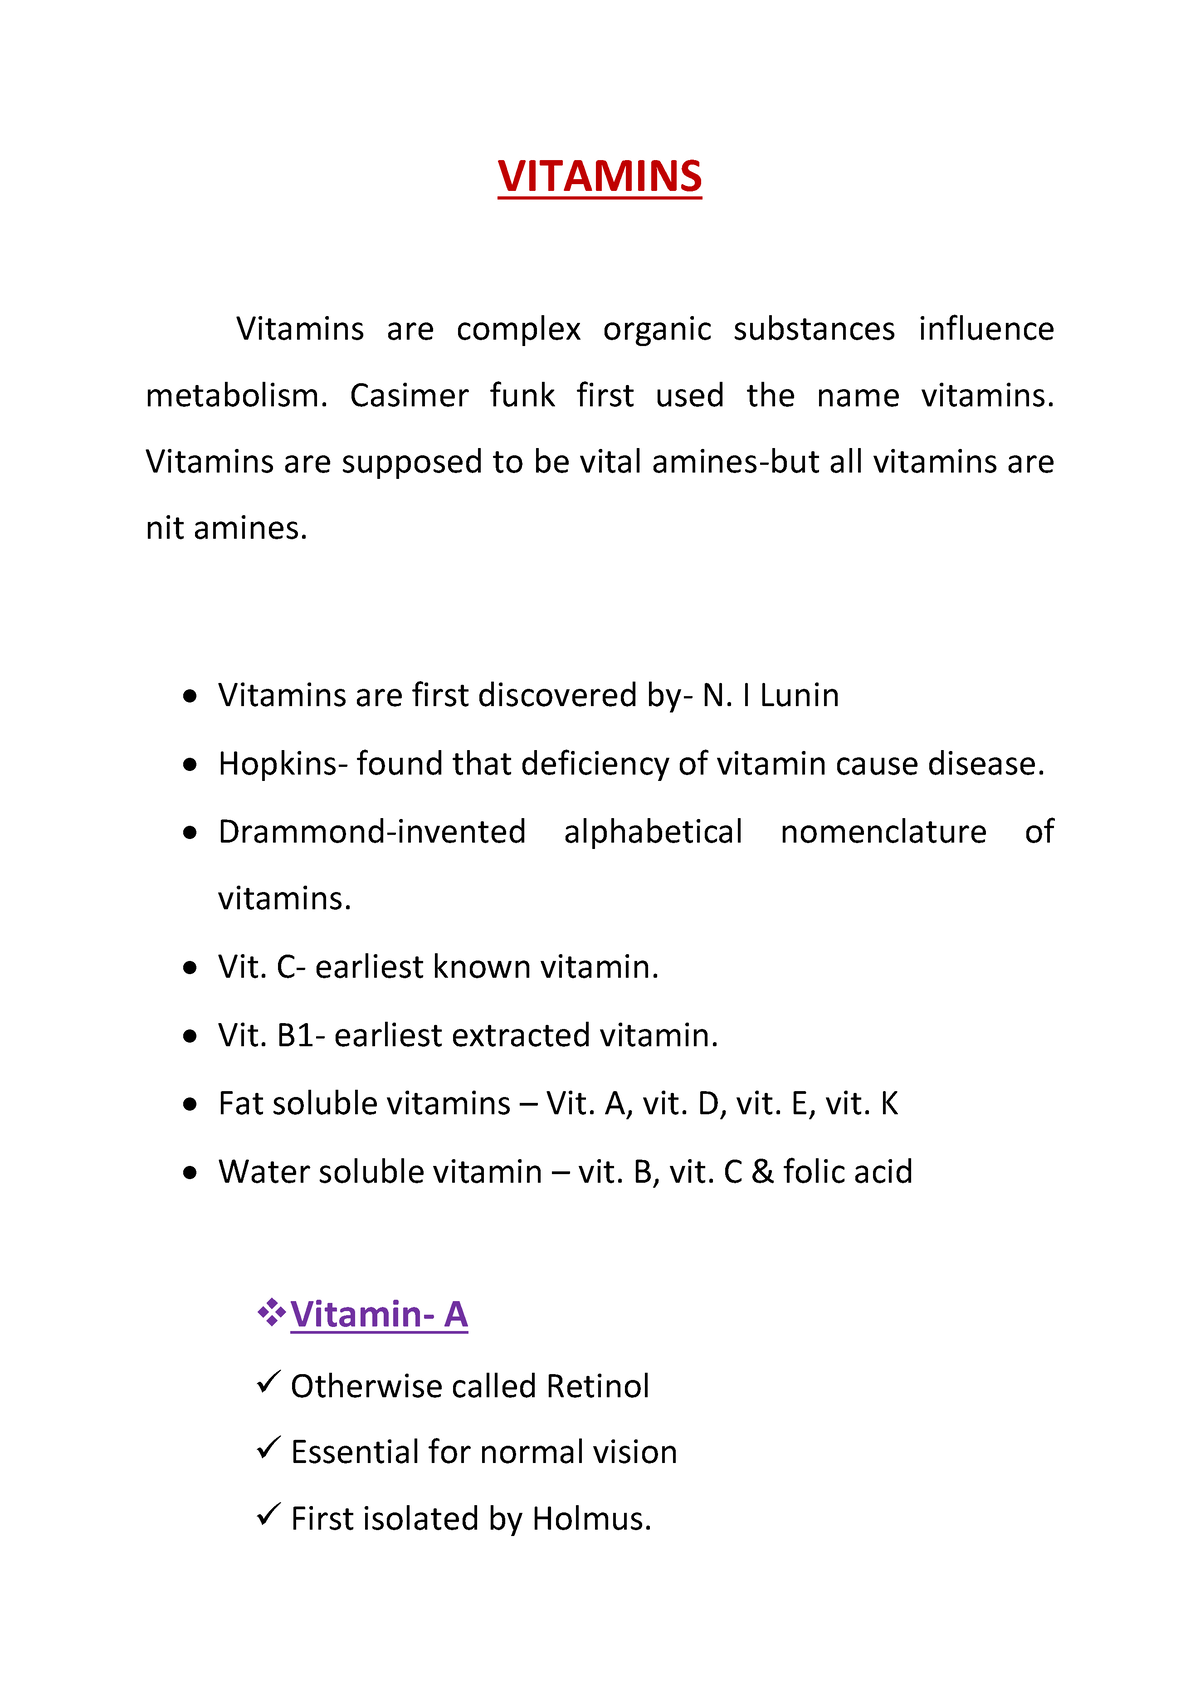 thesis of vitamins